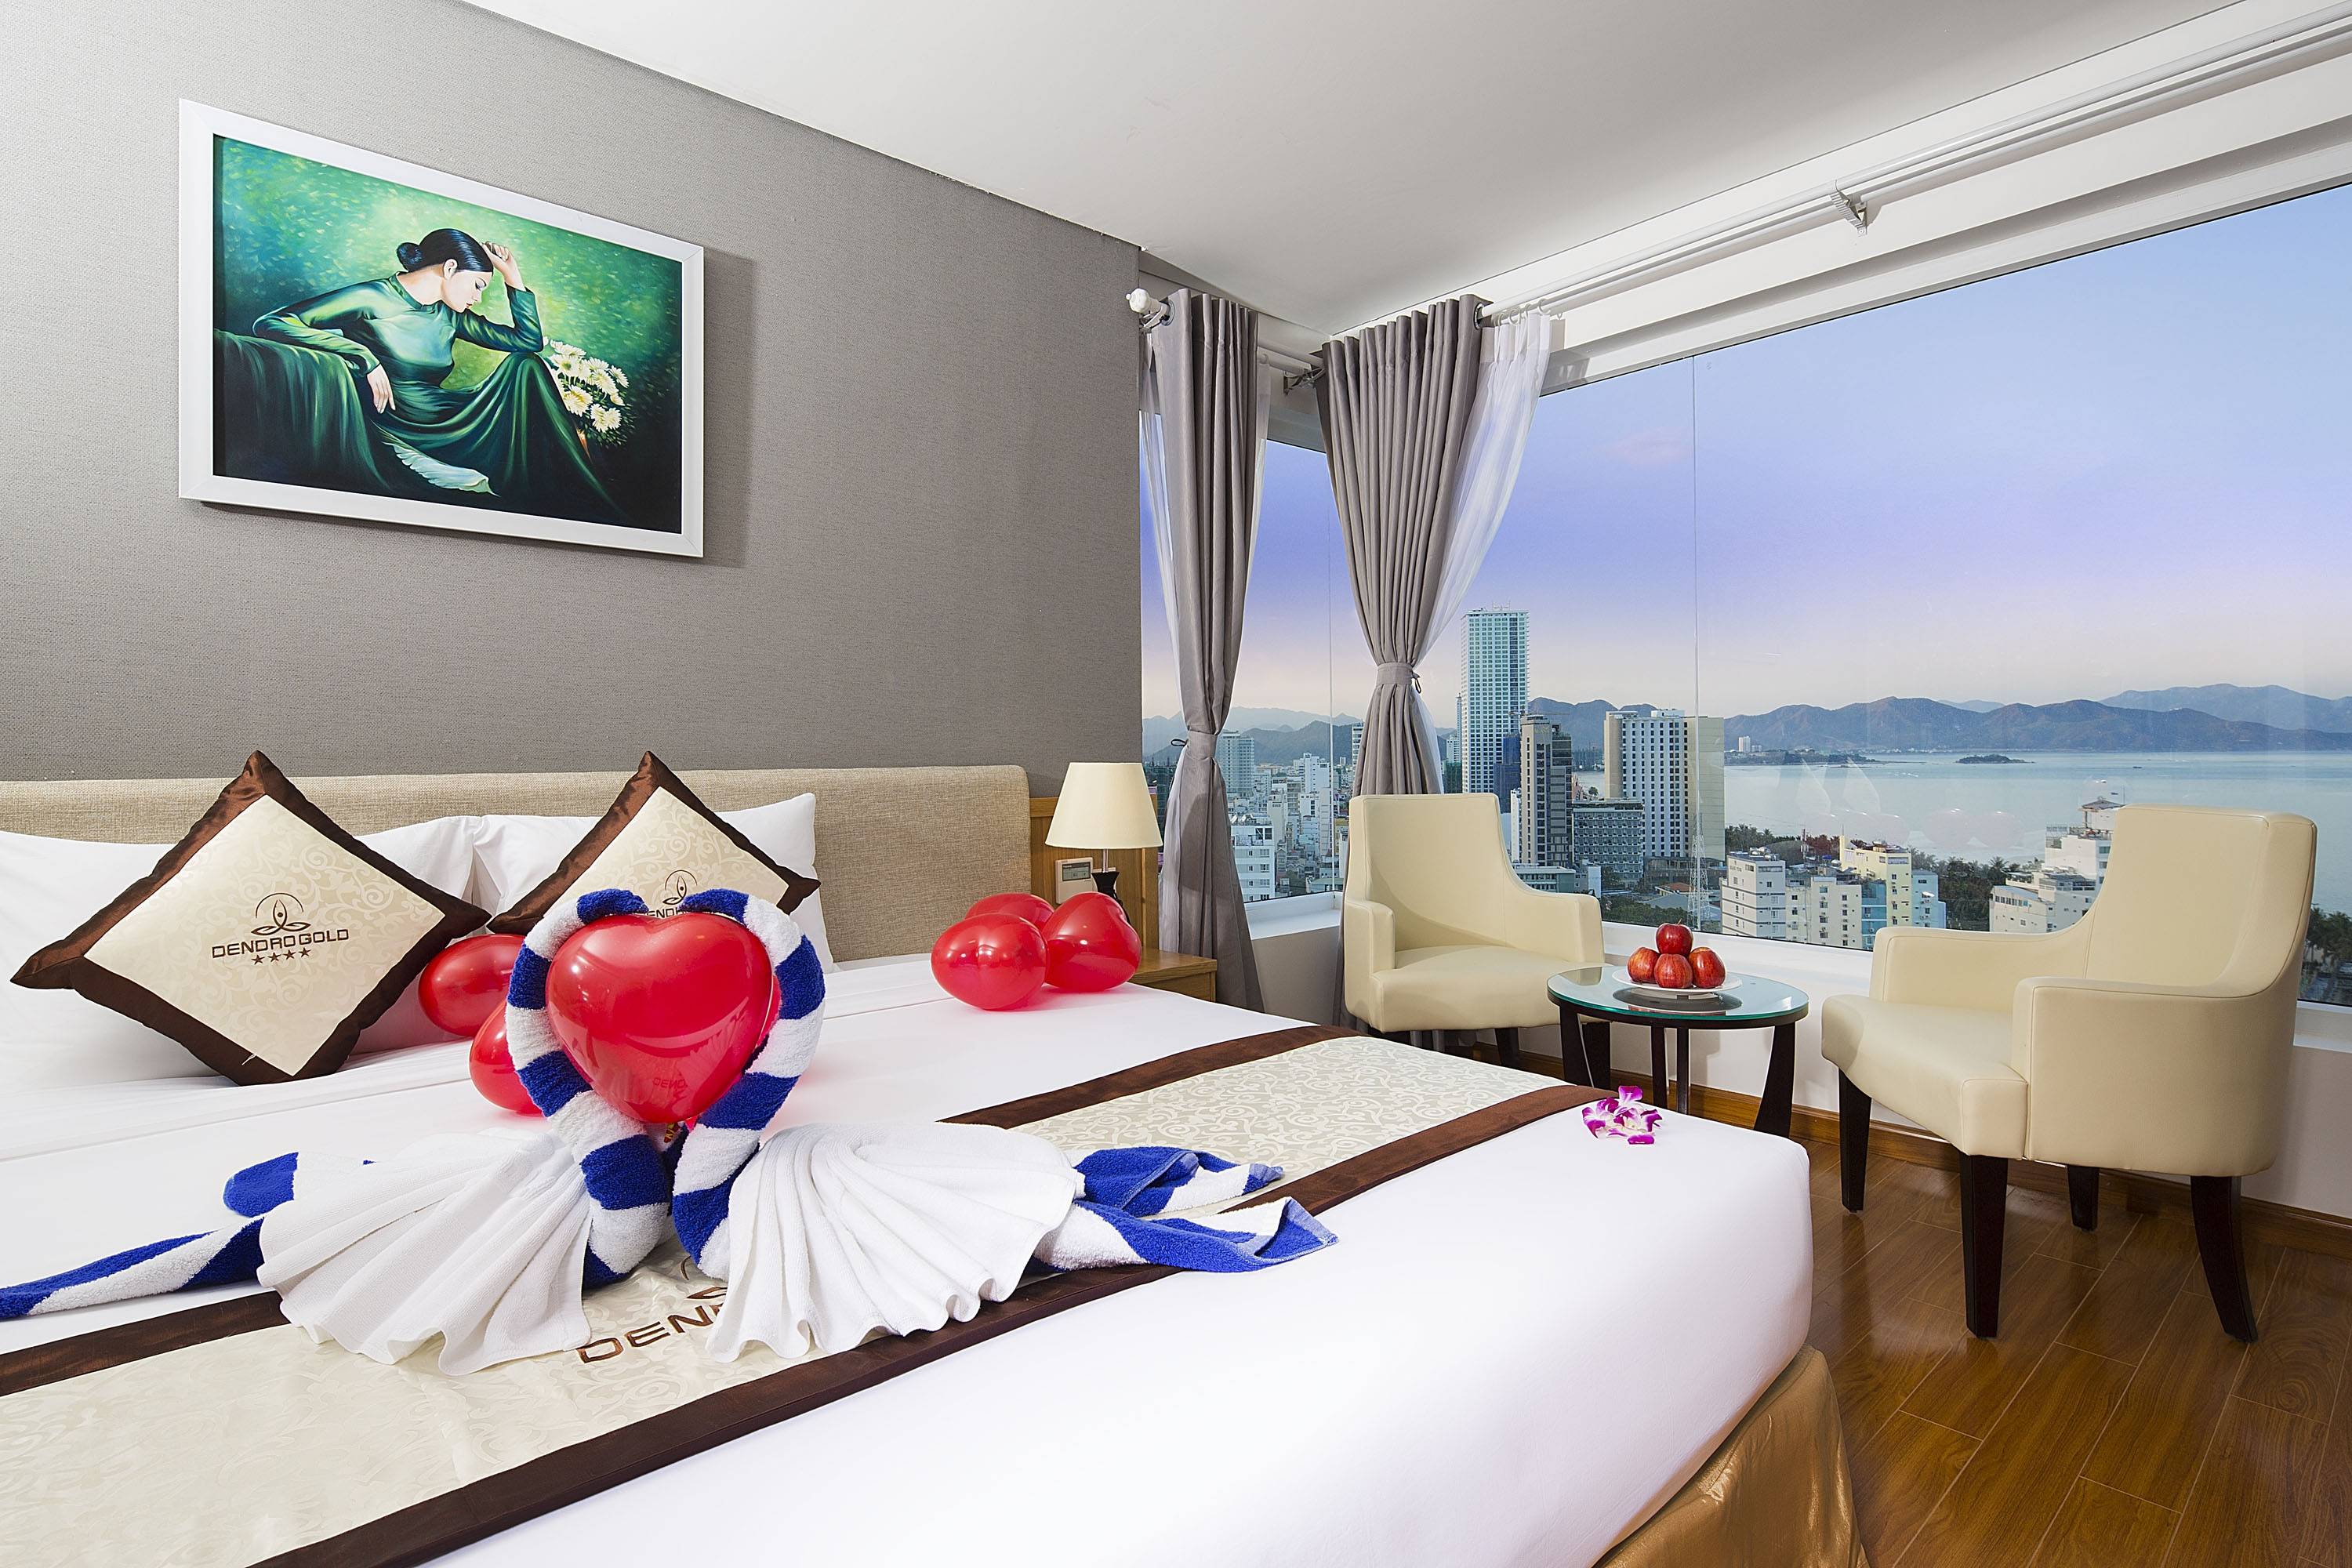 Dendro gold hotel 4* - вьетнам, кханьхоа - отели | пегас туристик